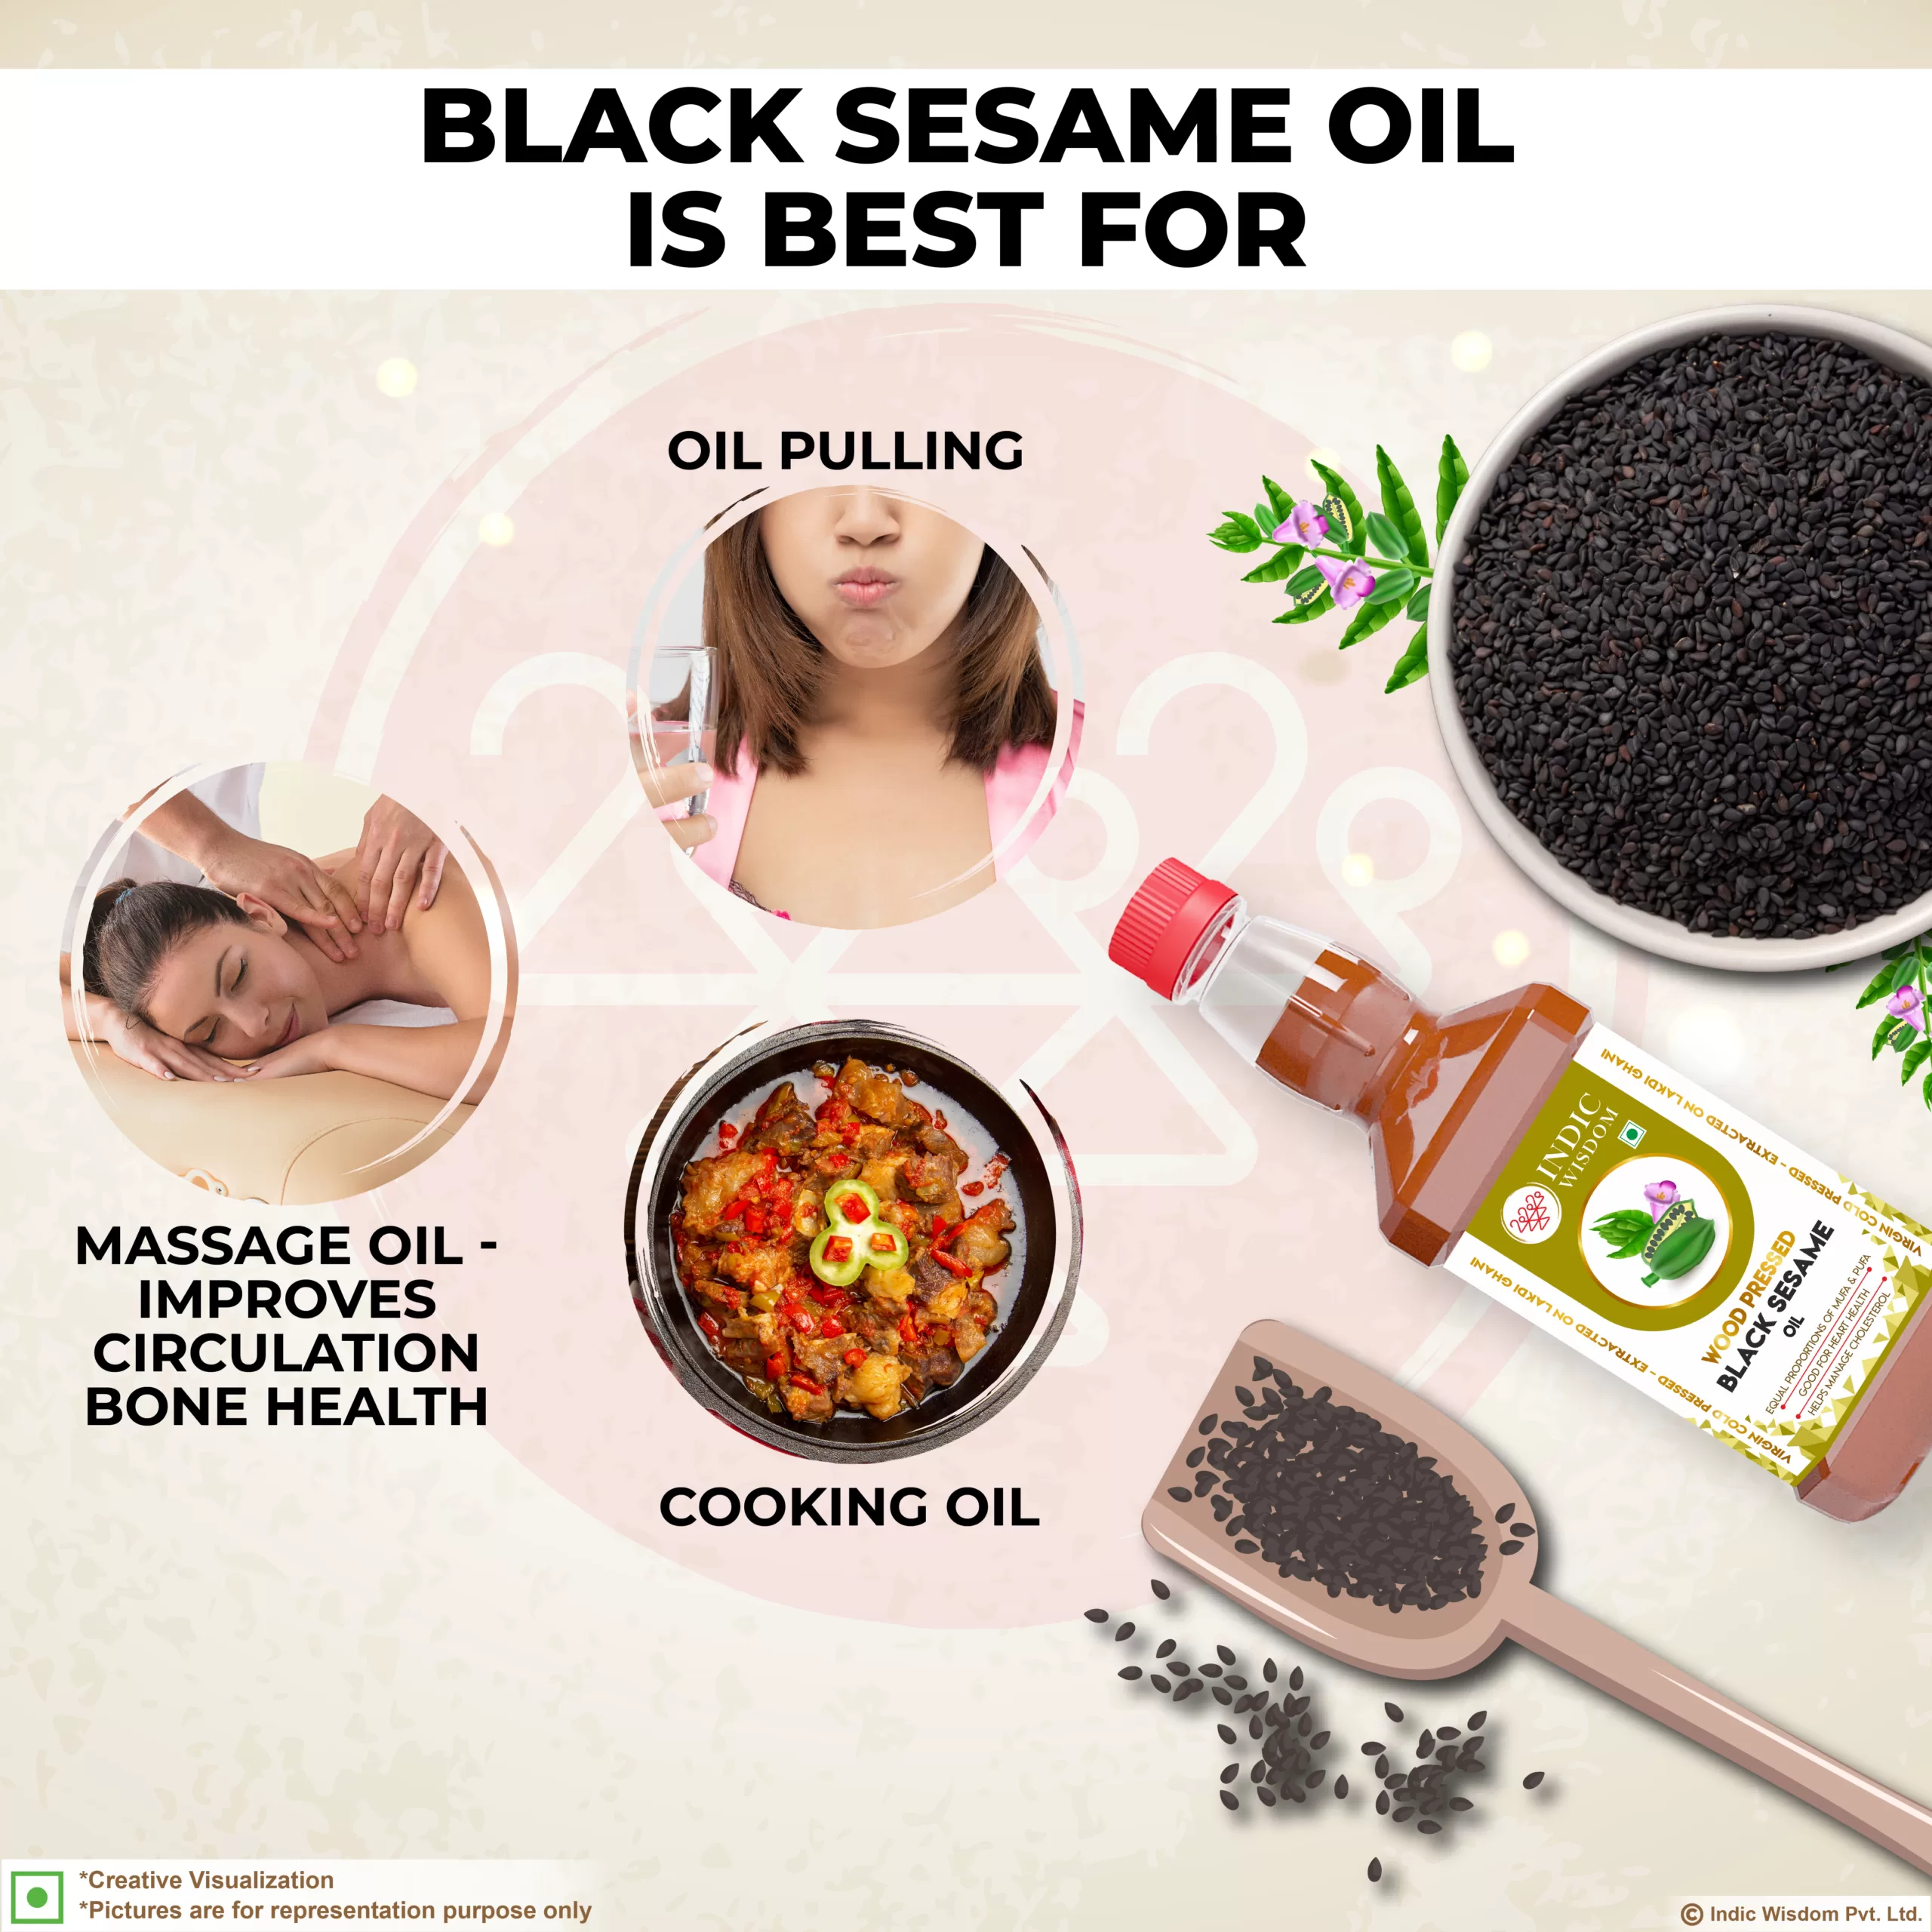 Benefits of wood pressed black sesame oil